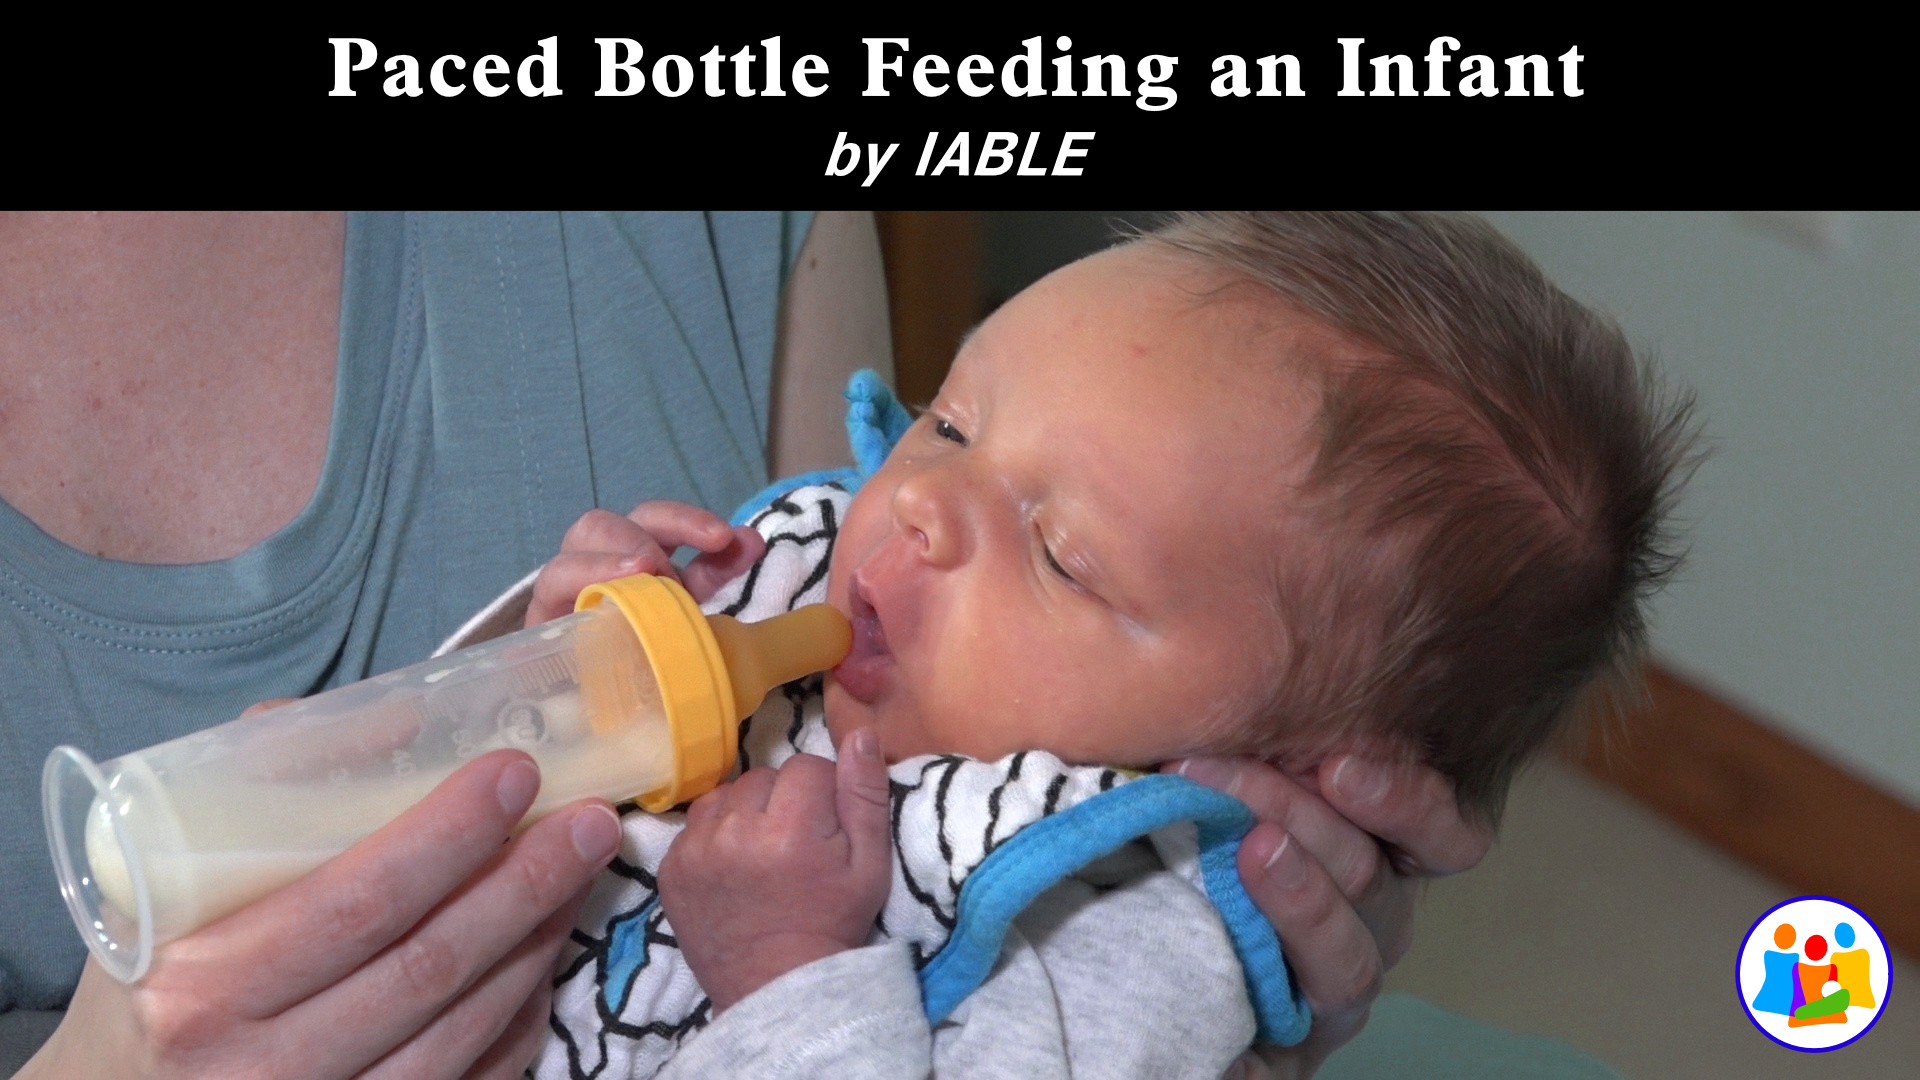 Paced Bottle Feeding Breastmilk to an Infant - Social Media